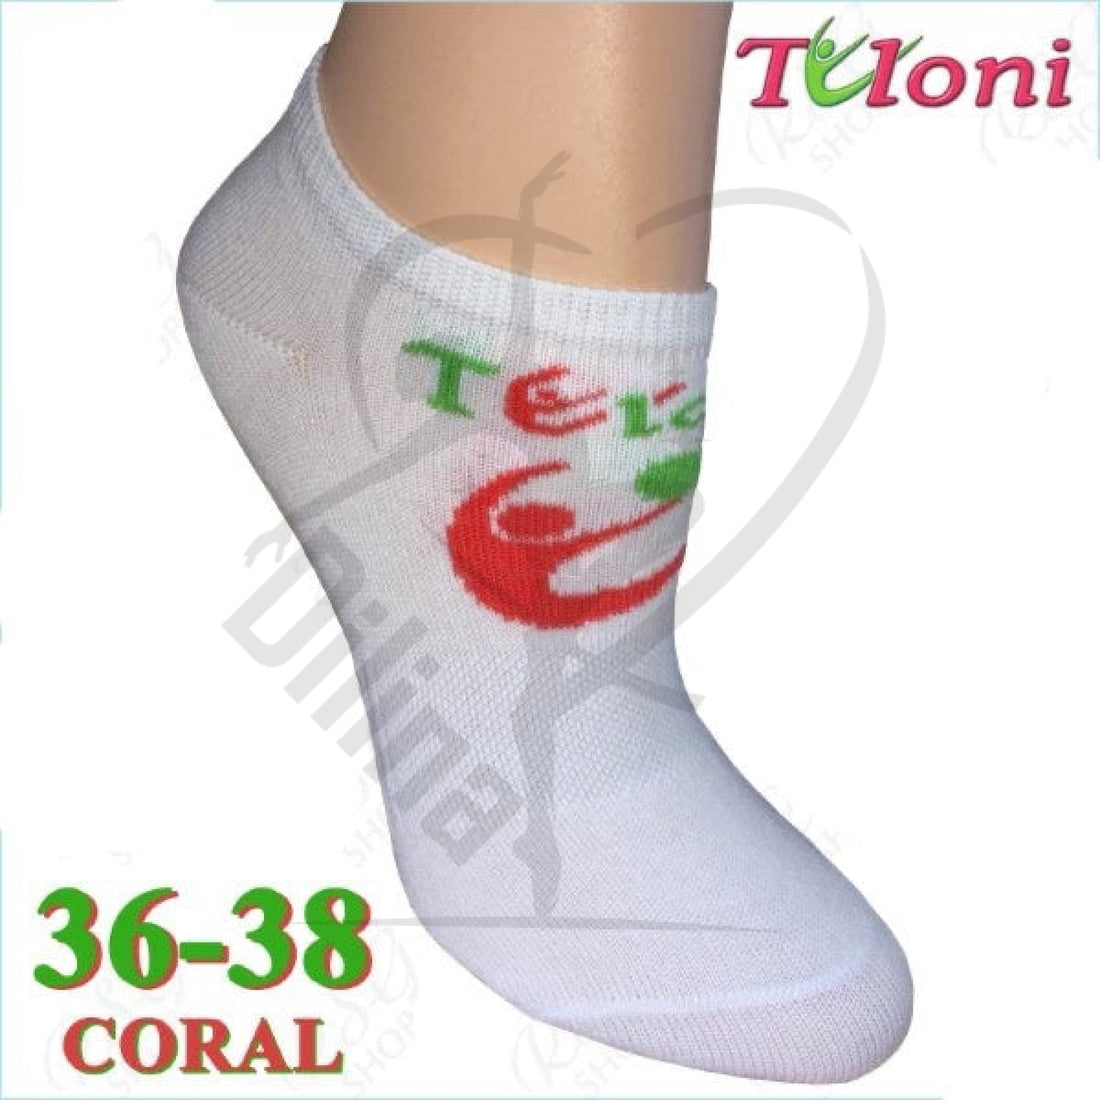 Tuloni Socks Coral 36-38 Tights